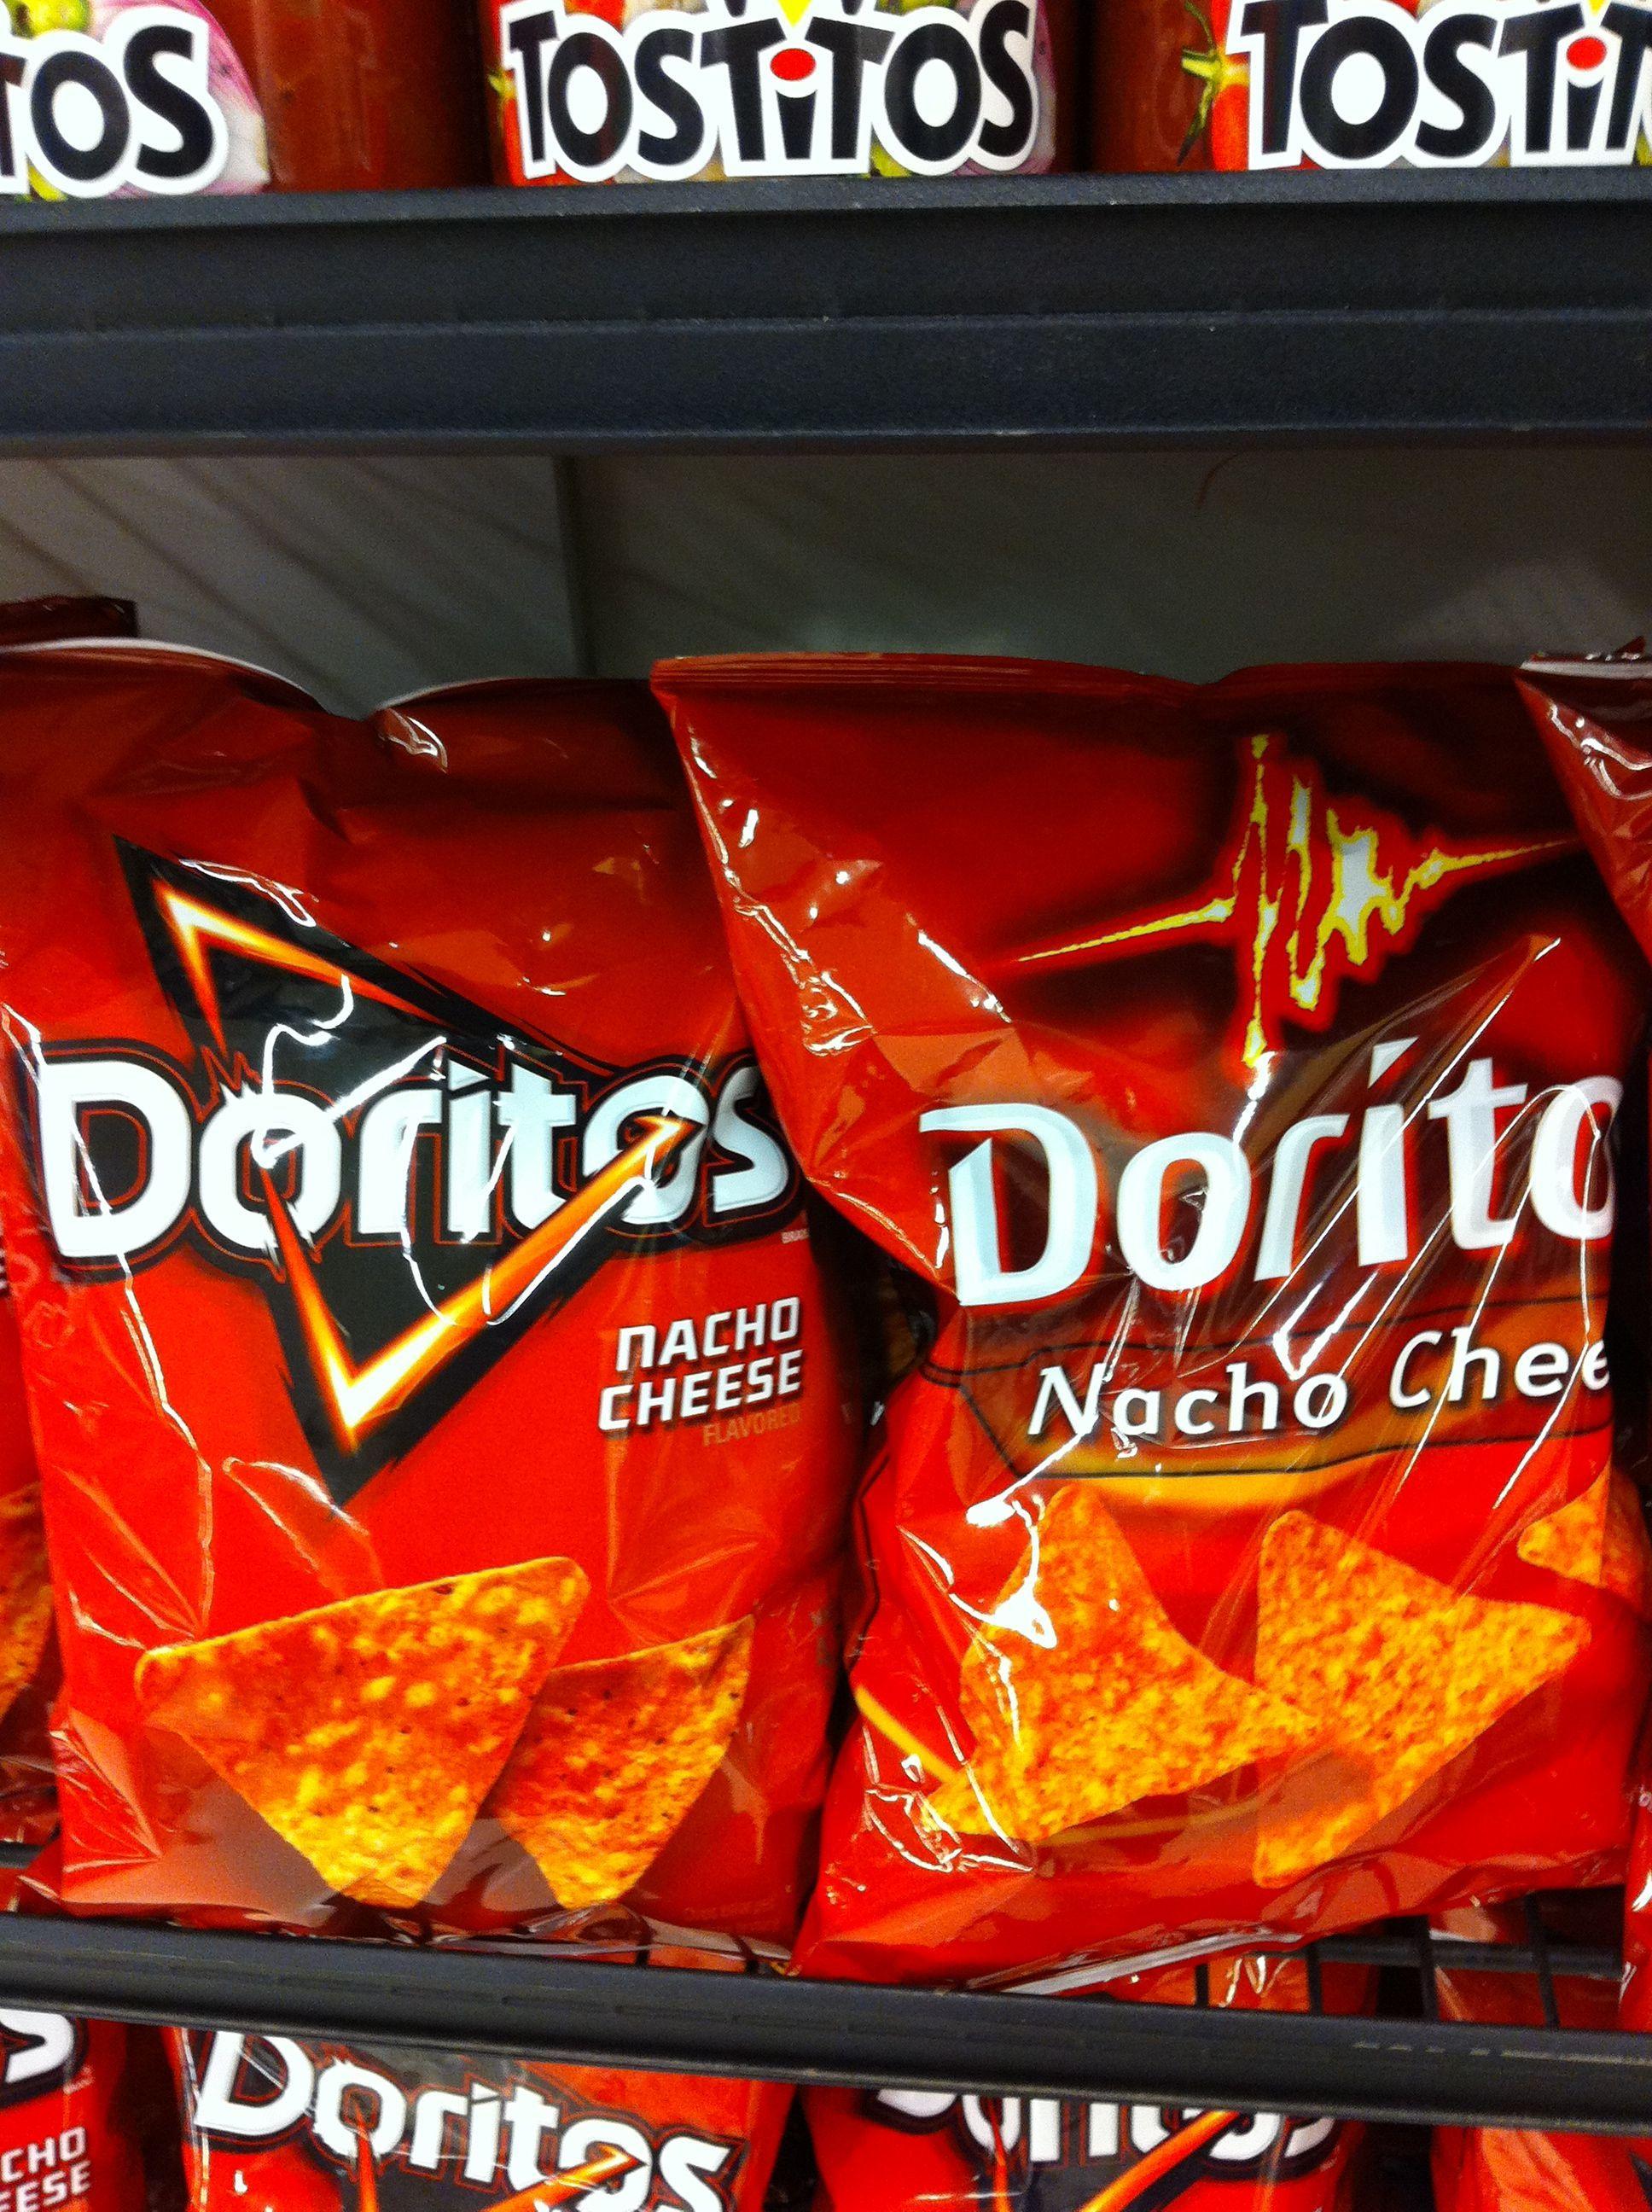 New Doritos Logo - I'm kinda diggin' the new Doritos logo!. Typography